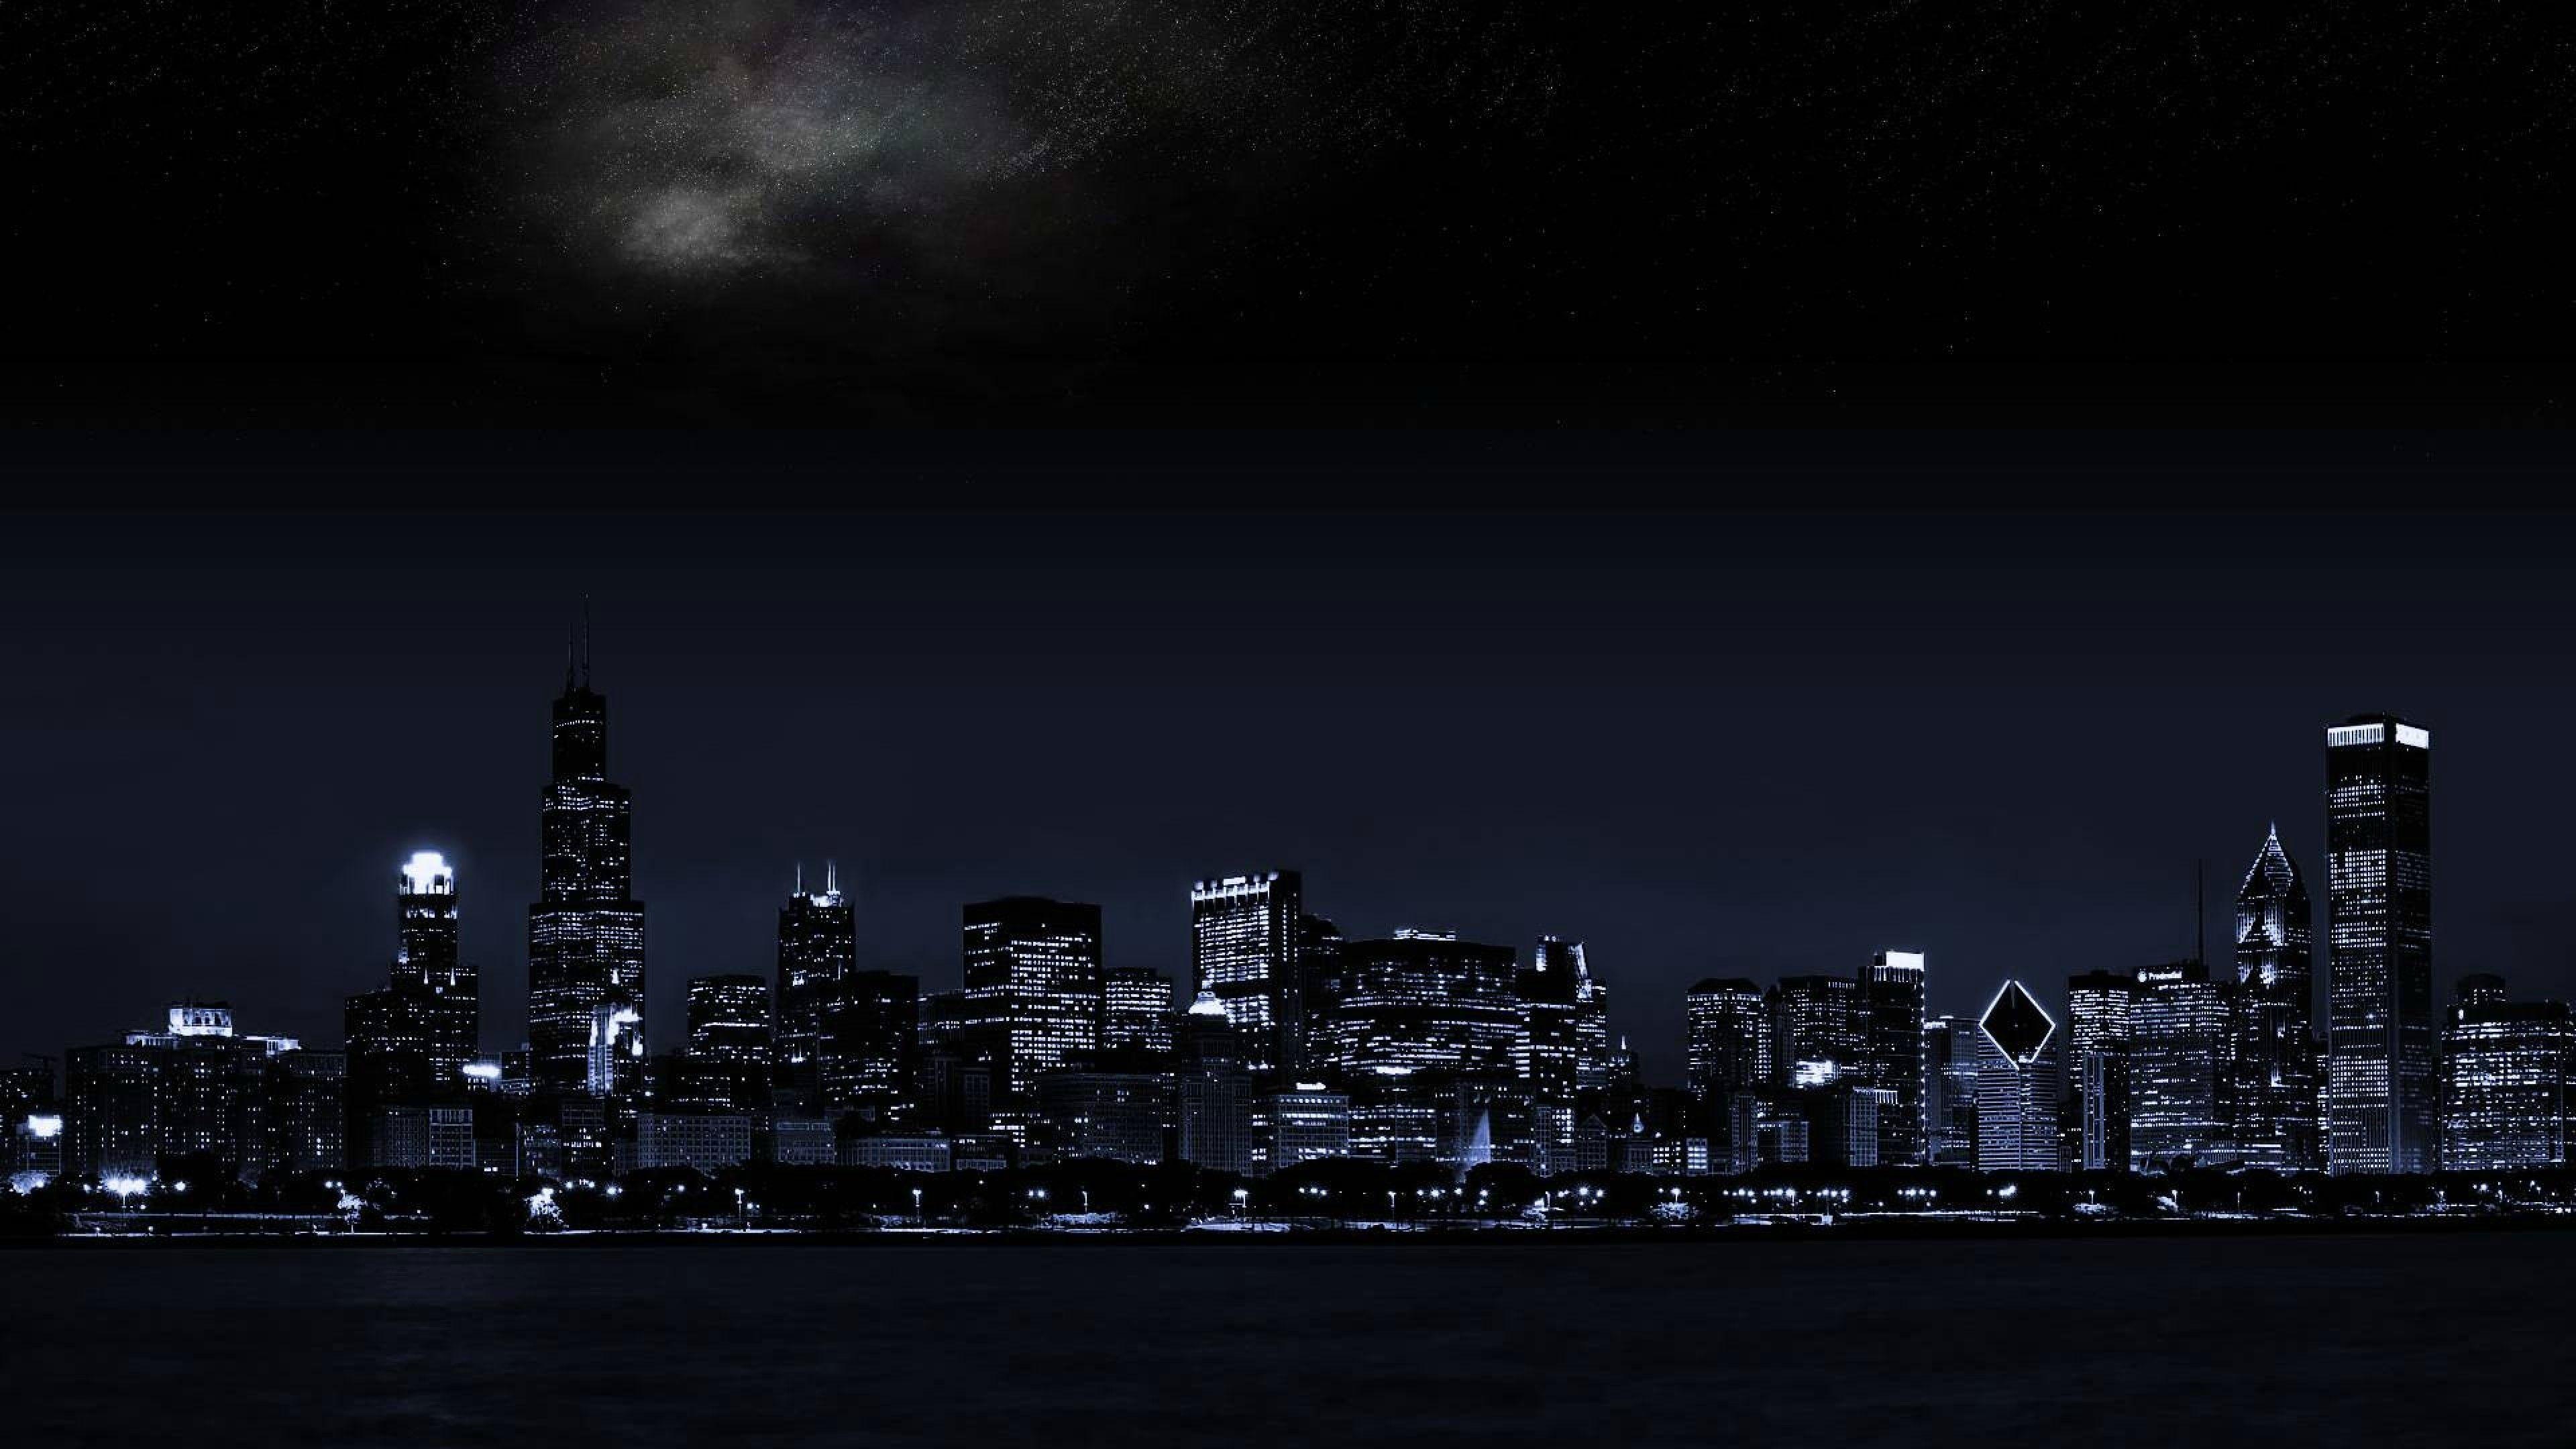 Dark City Ultra Hd Wallpapers - Top Free Dark City Ultra Hd Backgrounds